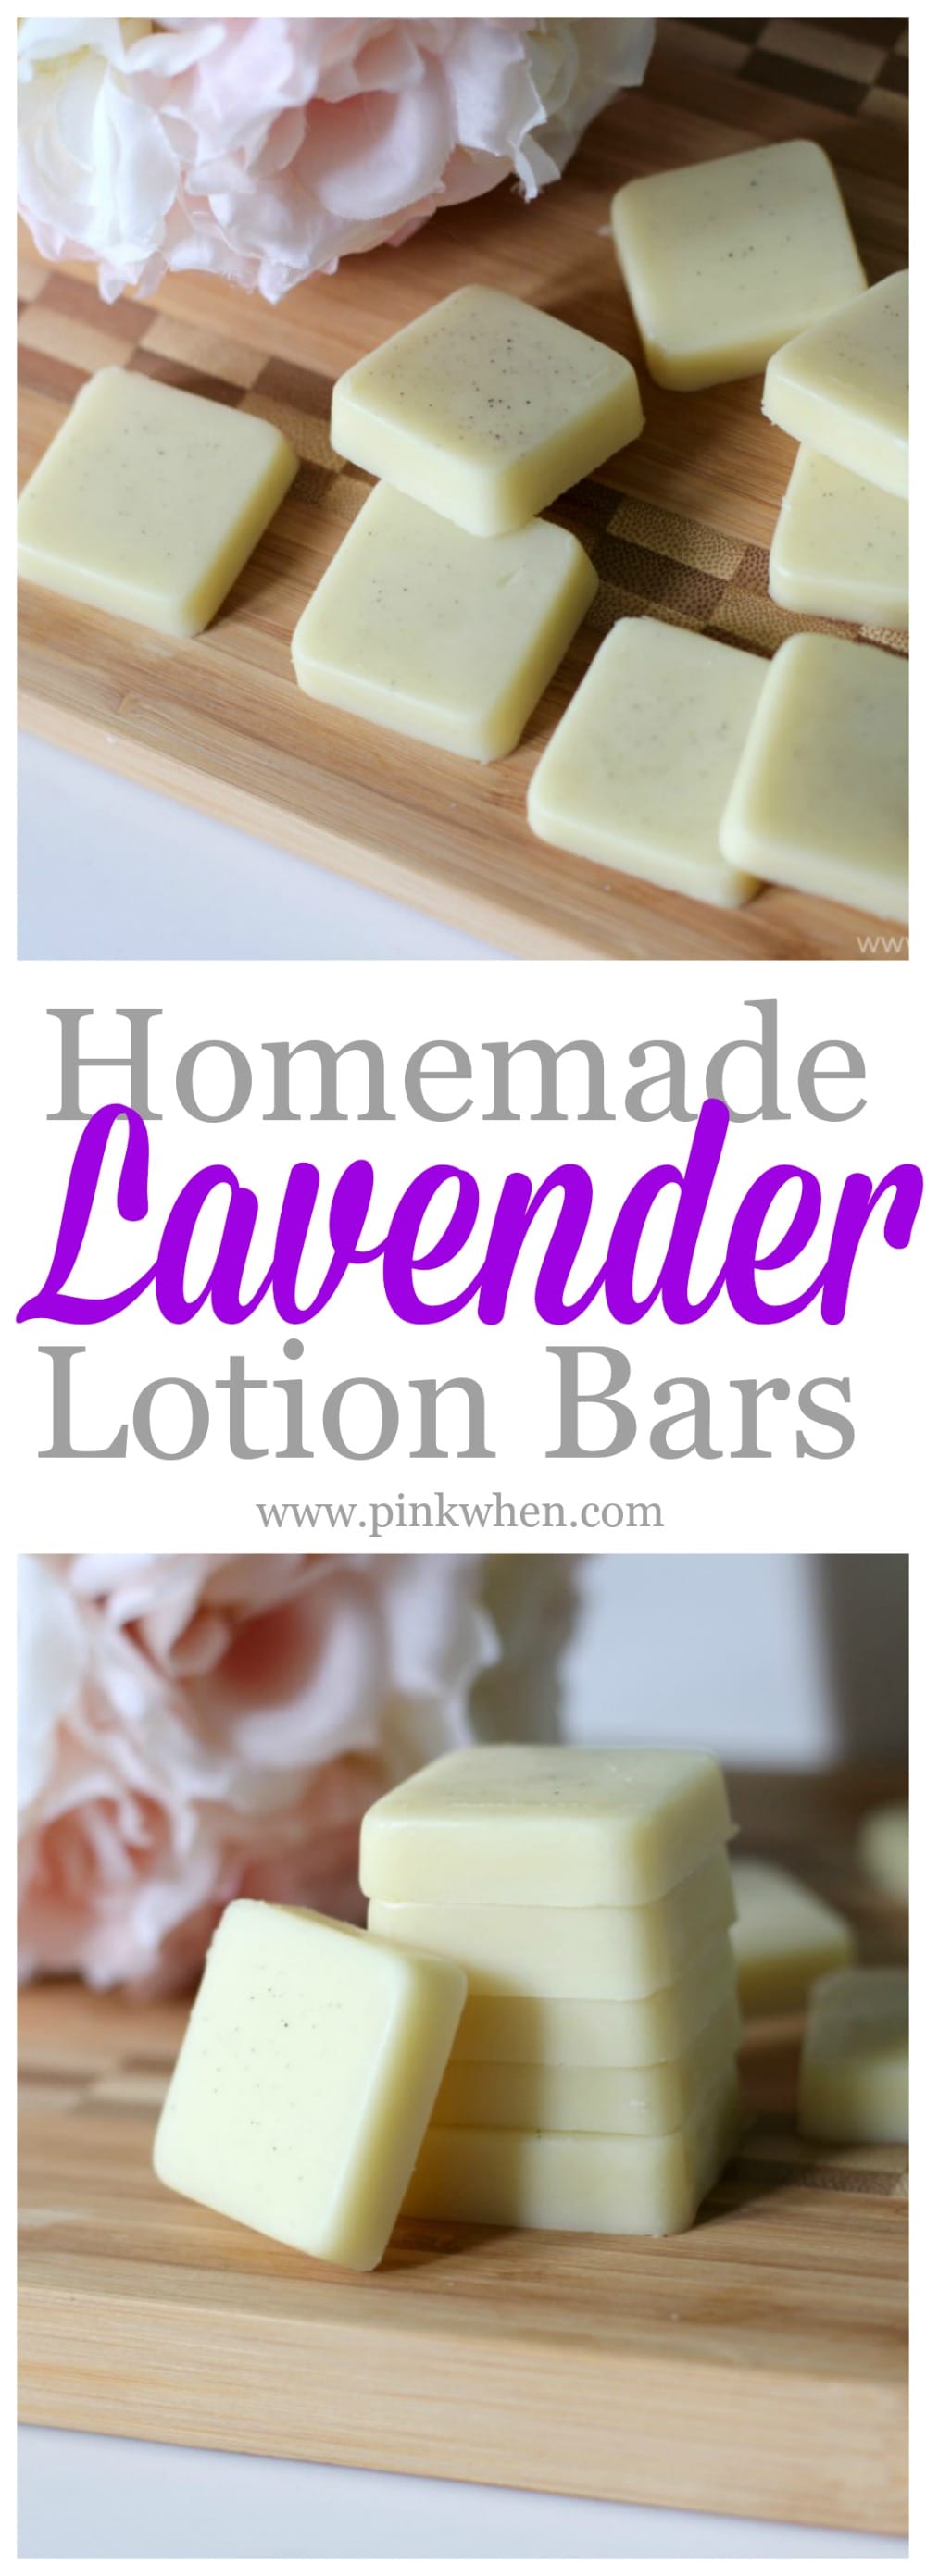 Homemade Lavender Lotion Bars